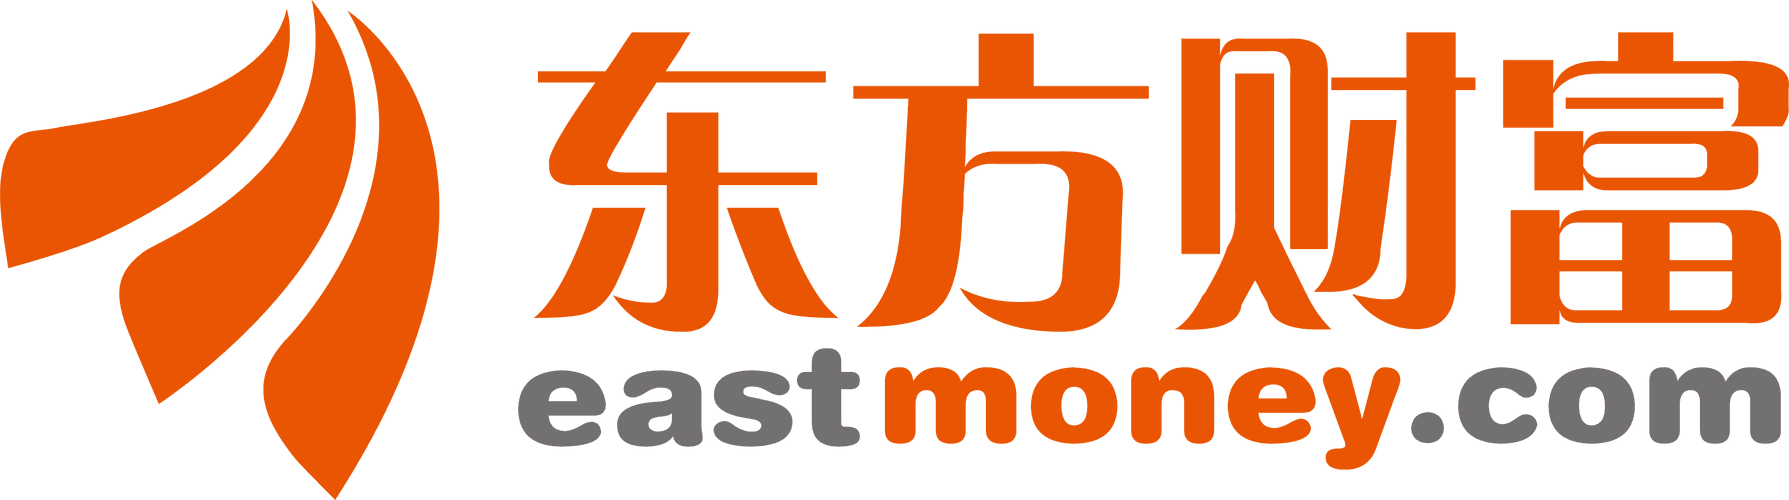 East Money